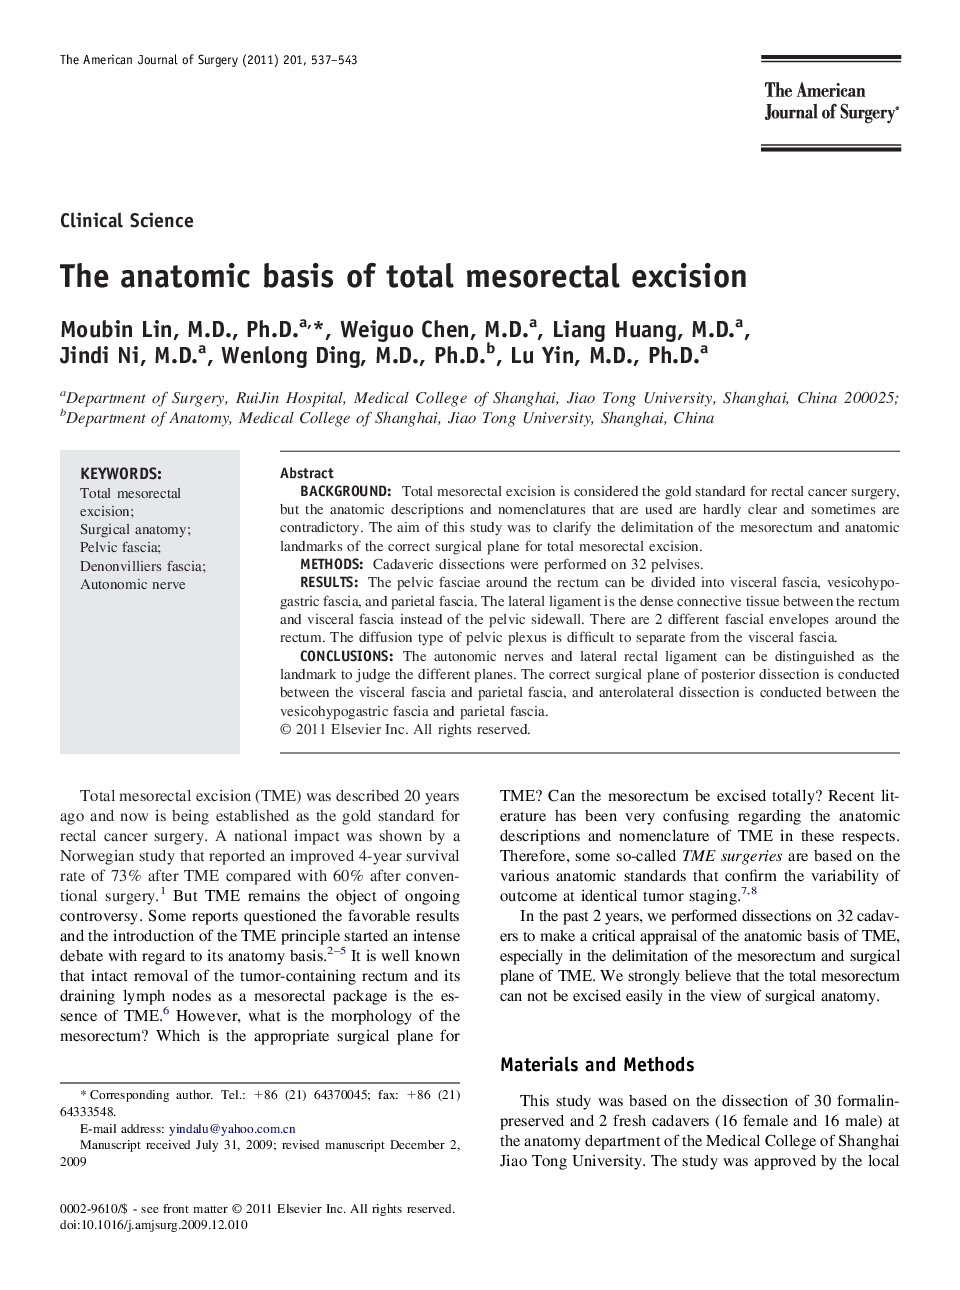 The anatomic basis of total mesorectal excision